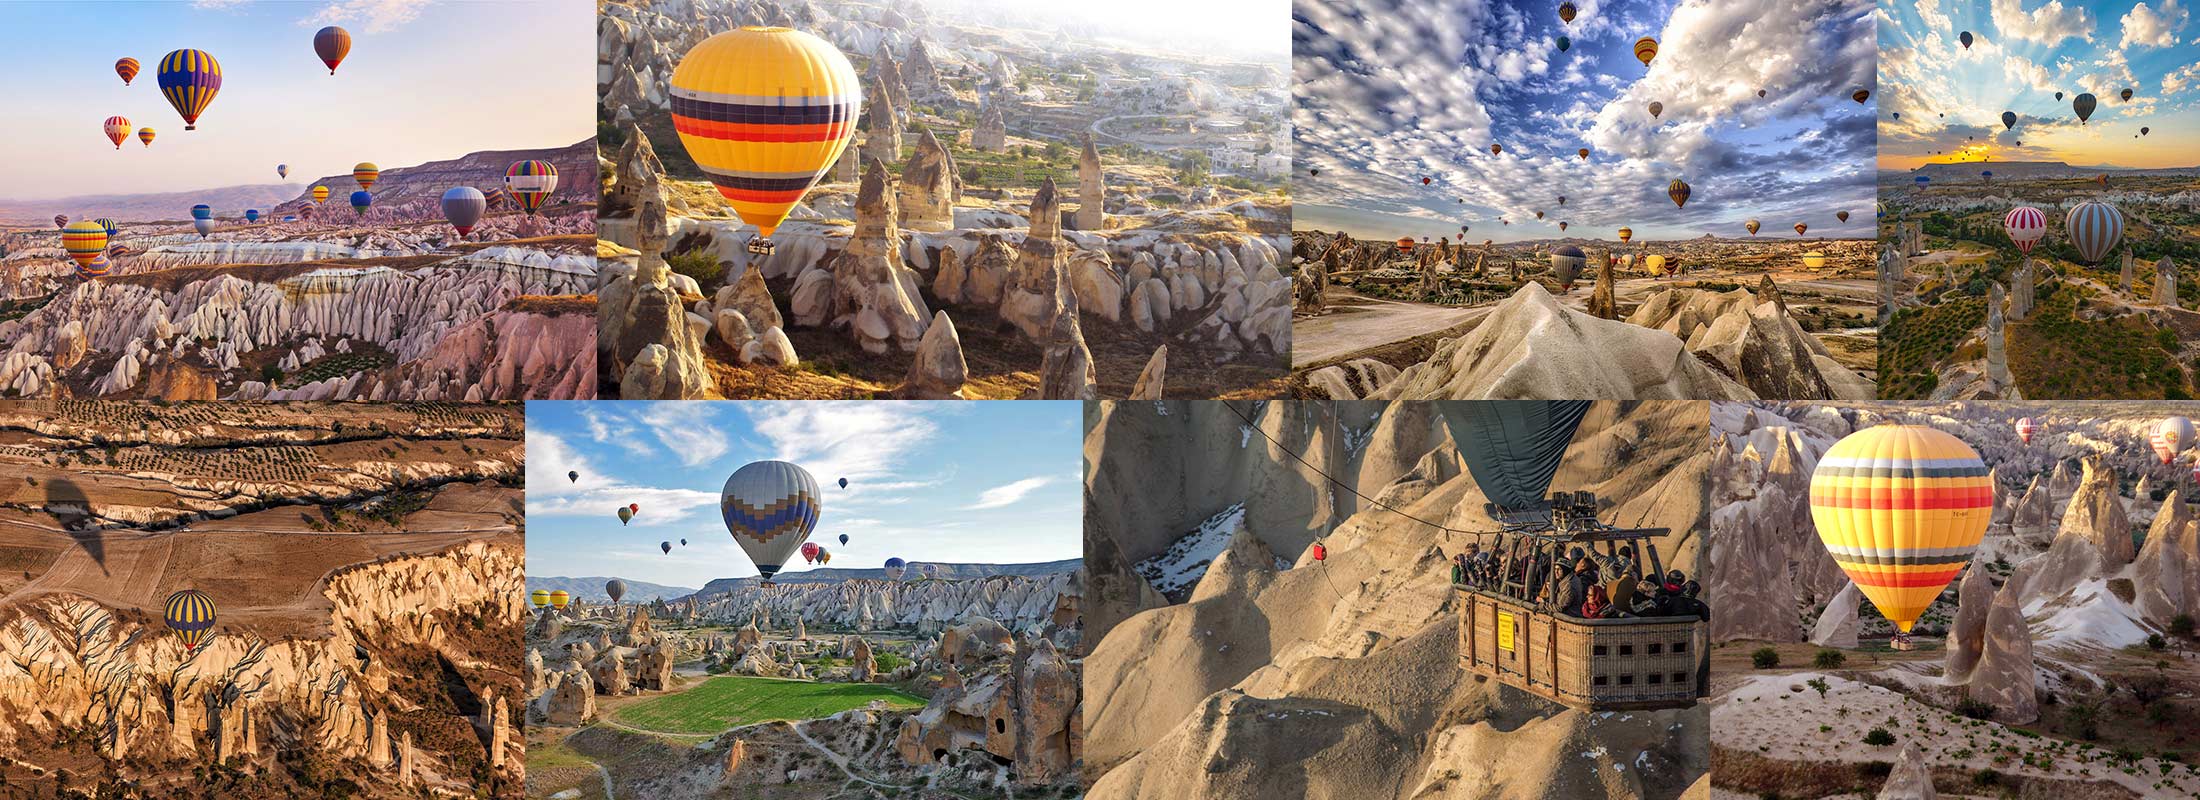 cappadocia-hot-air-balloon-tour-turkey